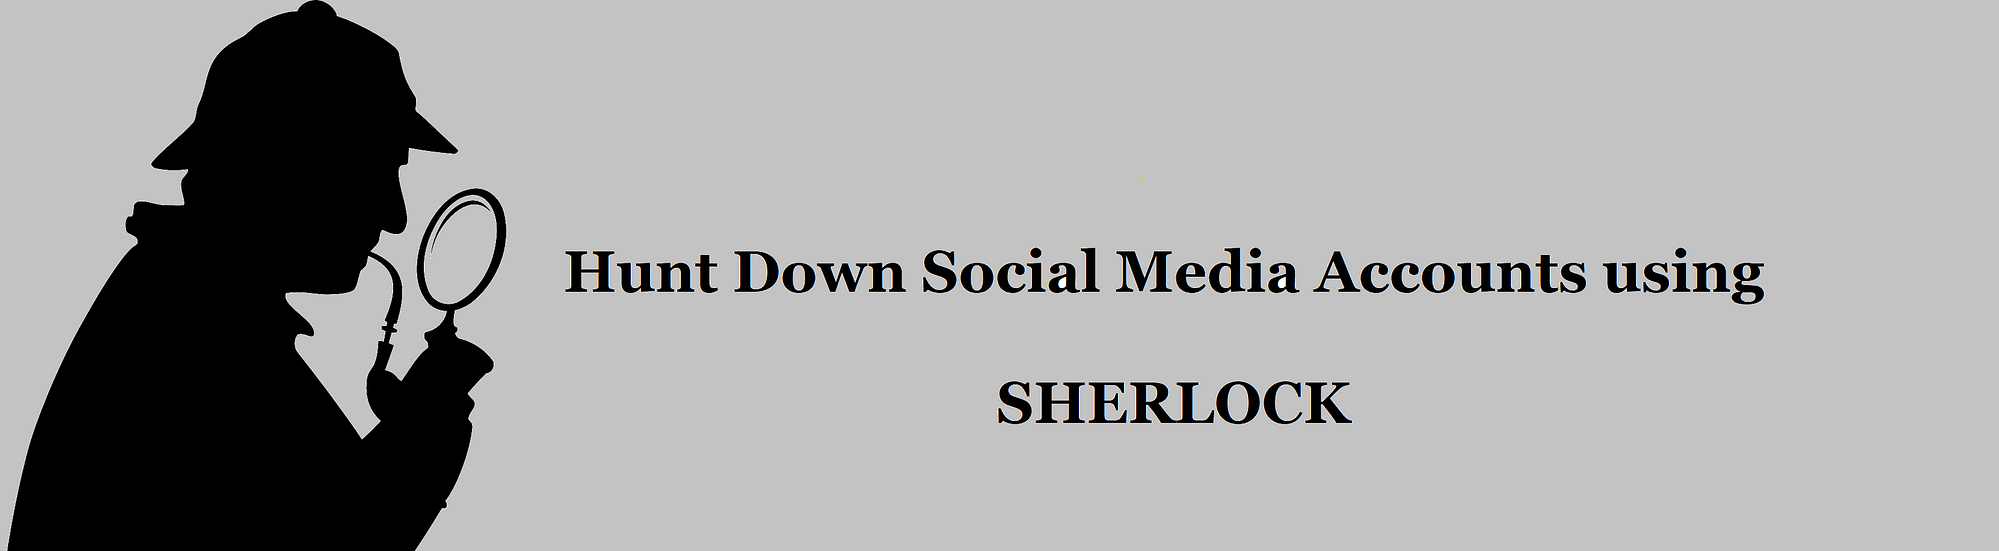 Hunt Down Social Media Accounts by username with Sherlock